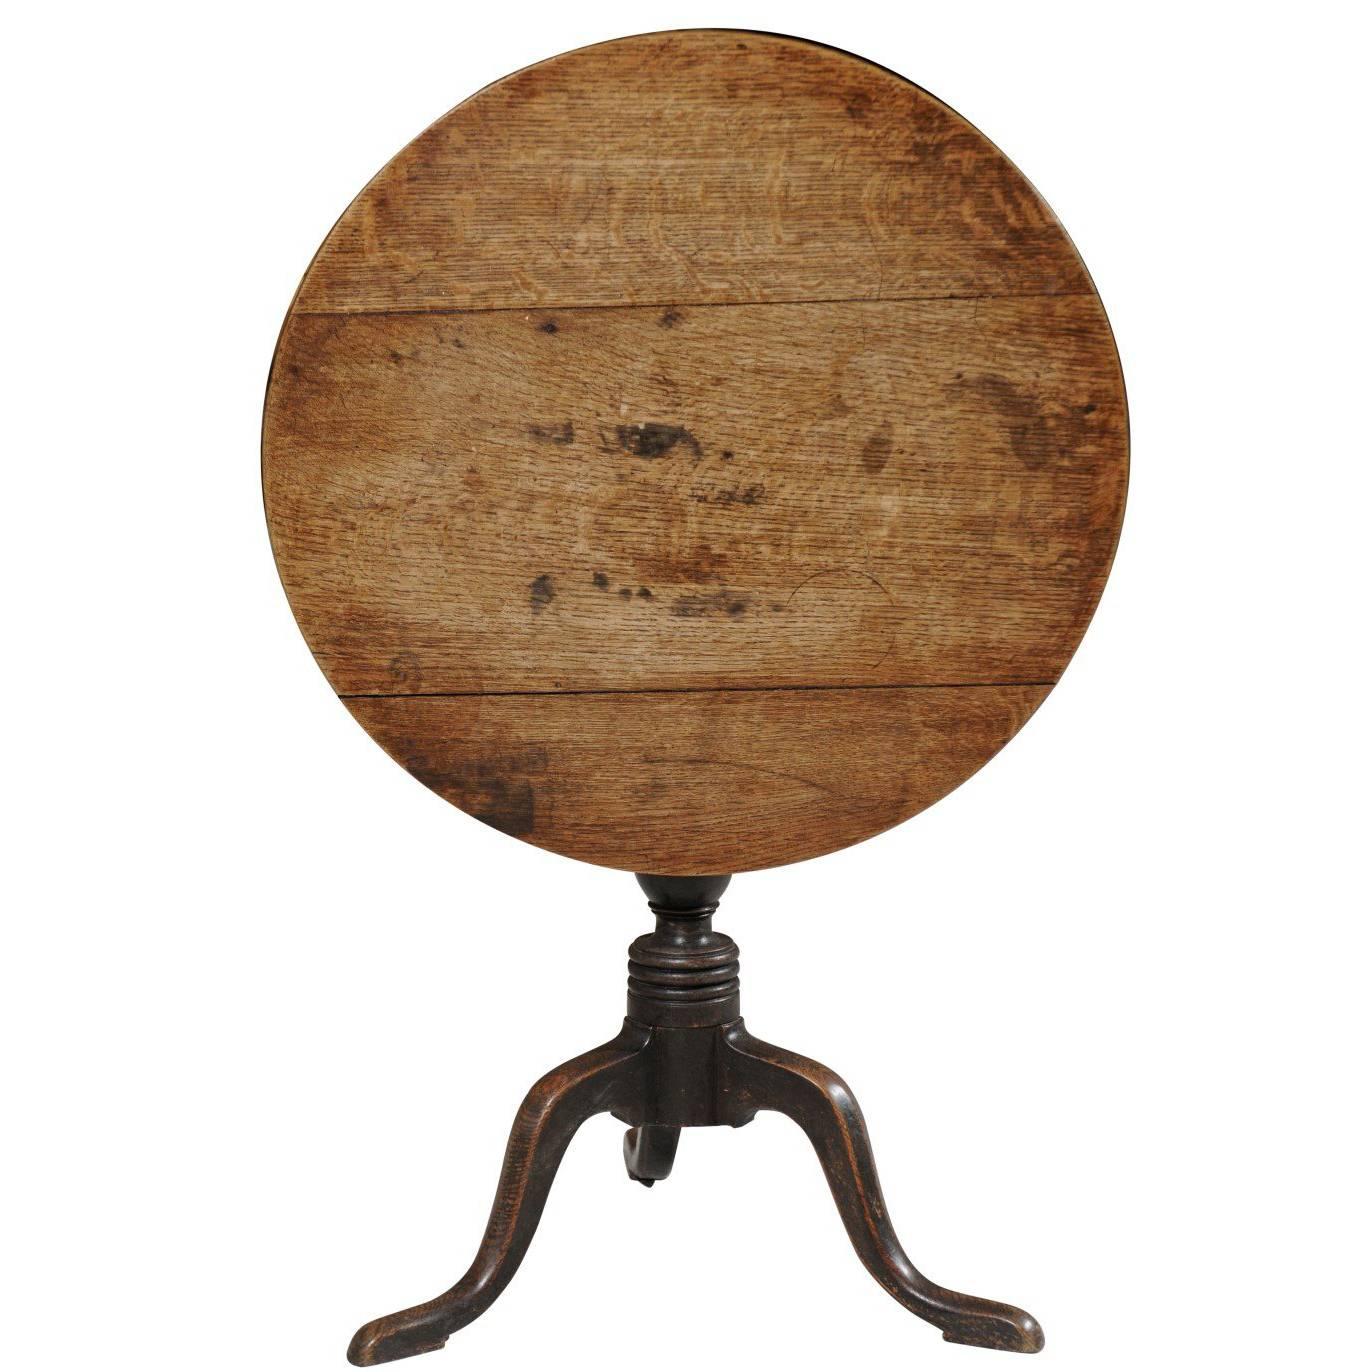 French Oak 19th Century Rustic Tilt-Top Gu�éridon Table with Pedestal Tripod Base